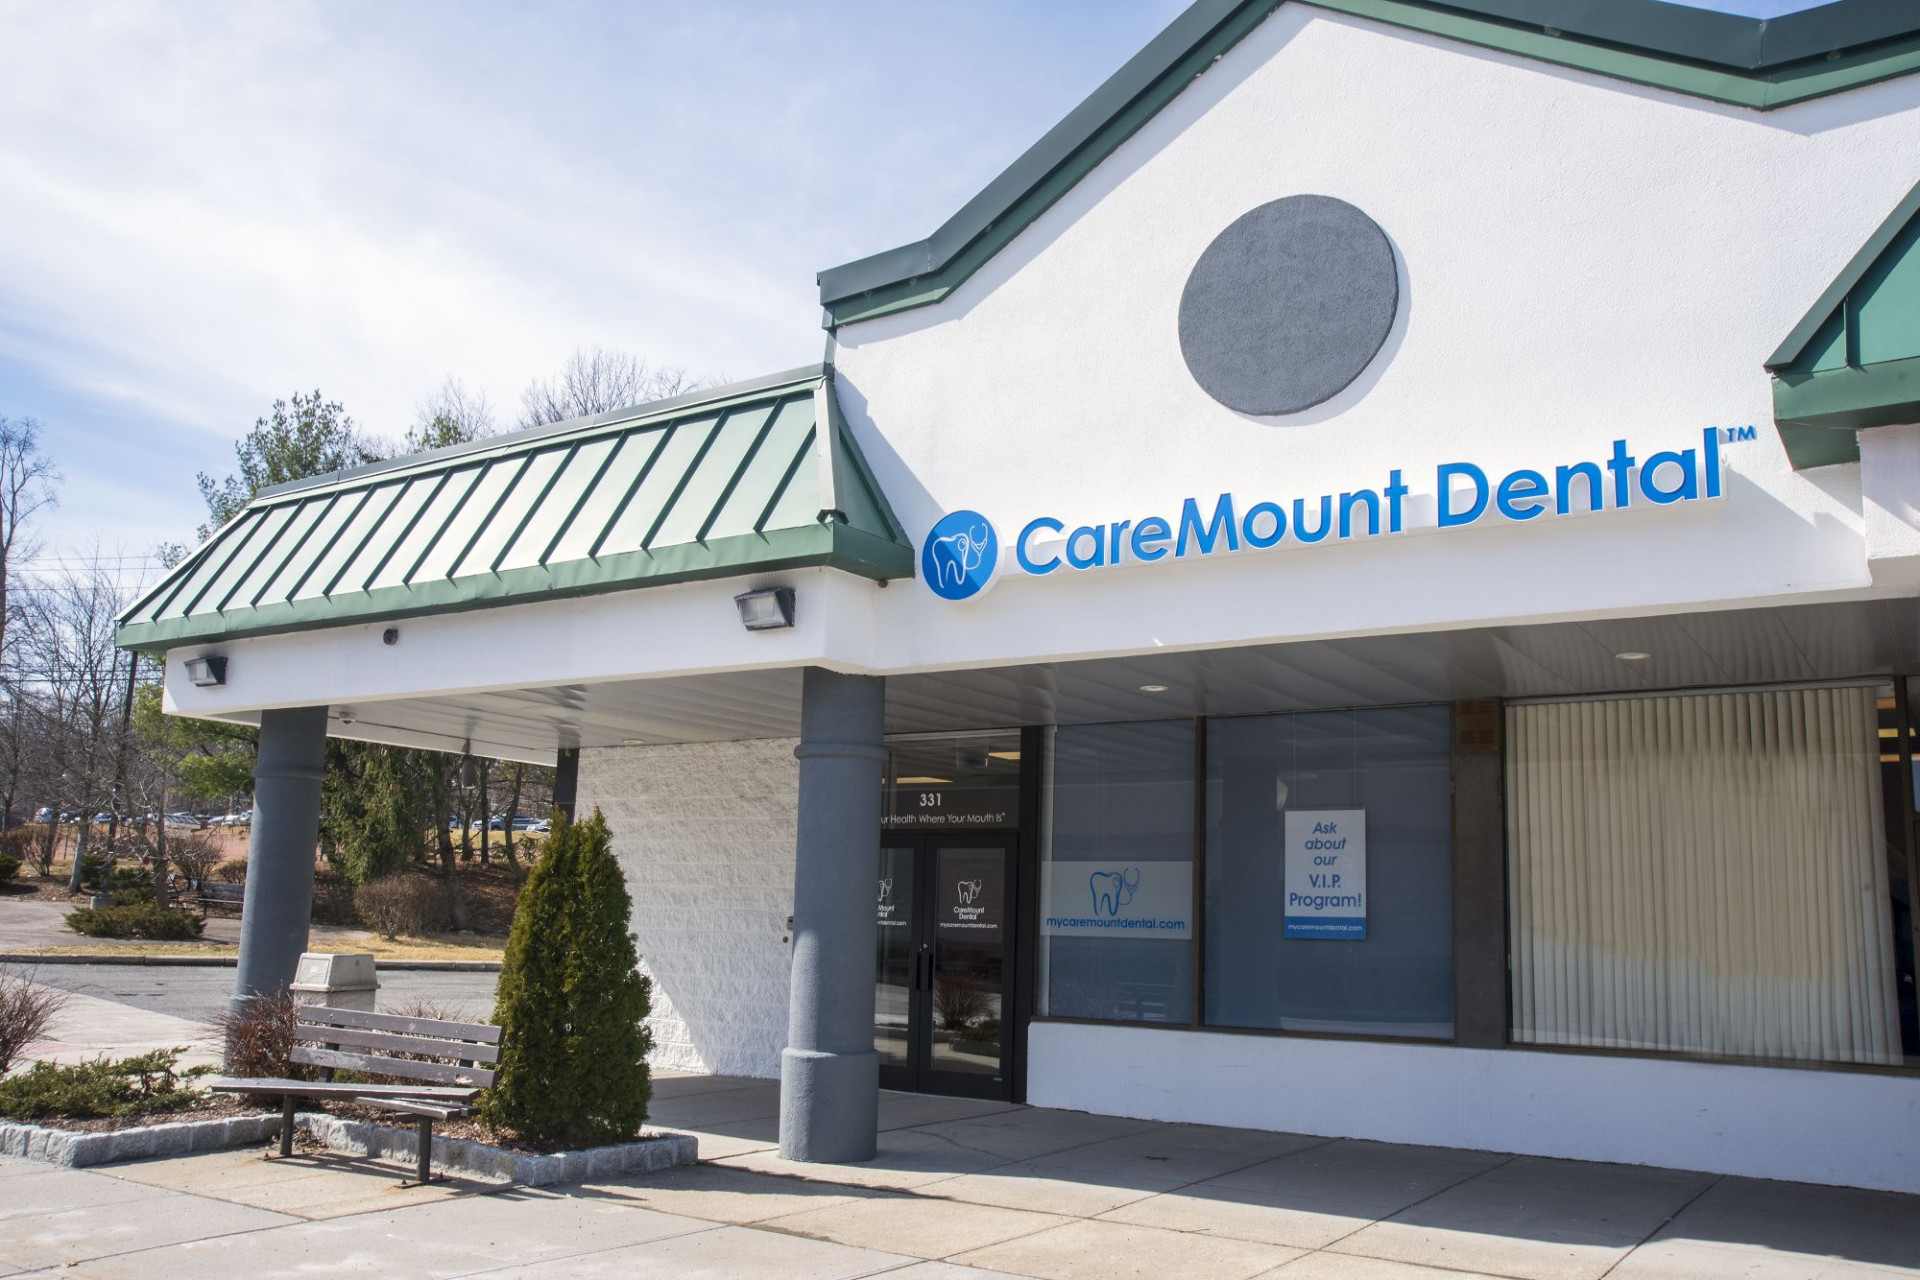 CareMount Dental building exterior